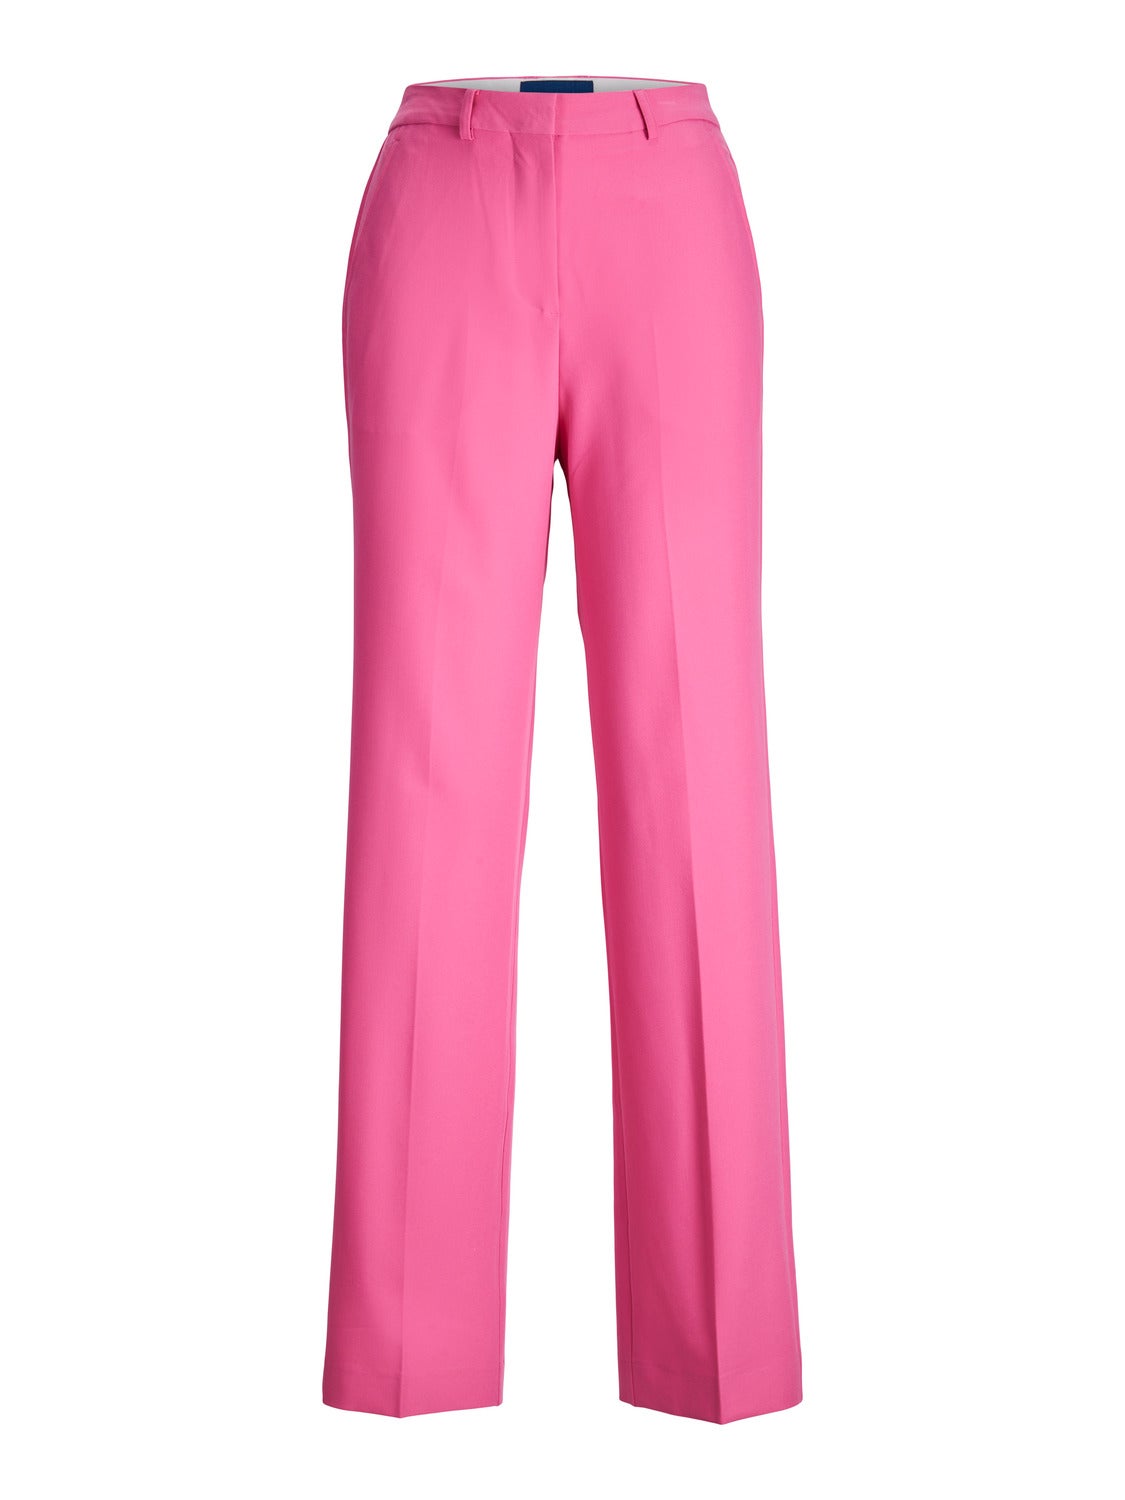 Tailored trouser | Pants | Women's | Ferragamo US